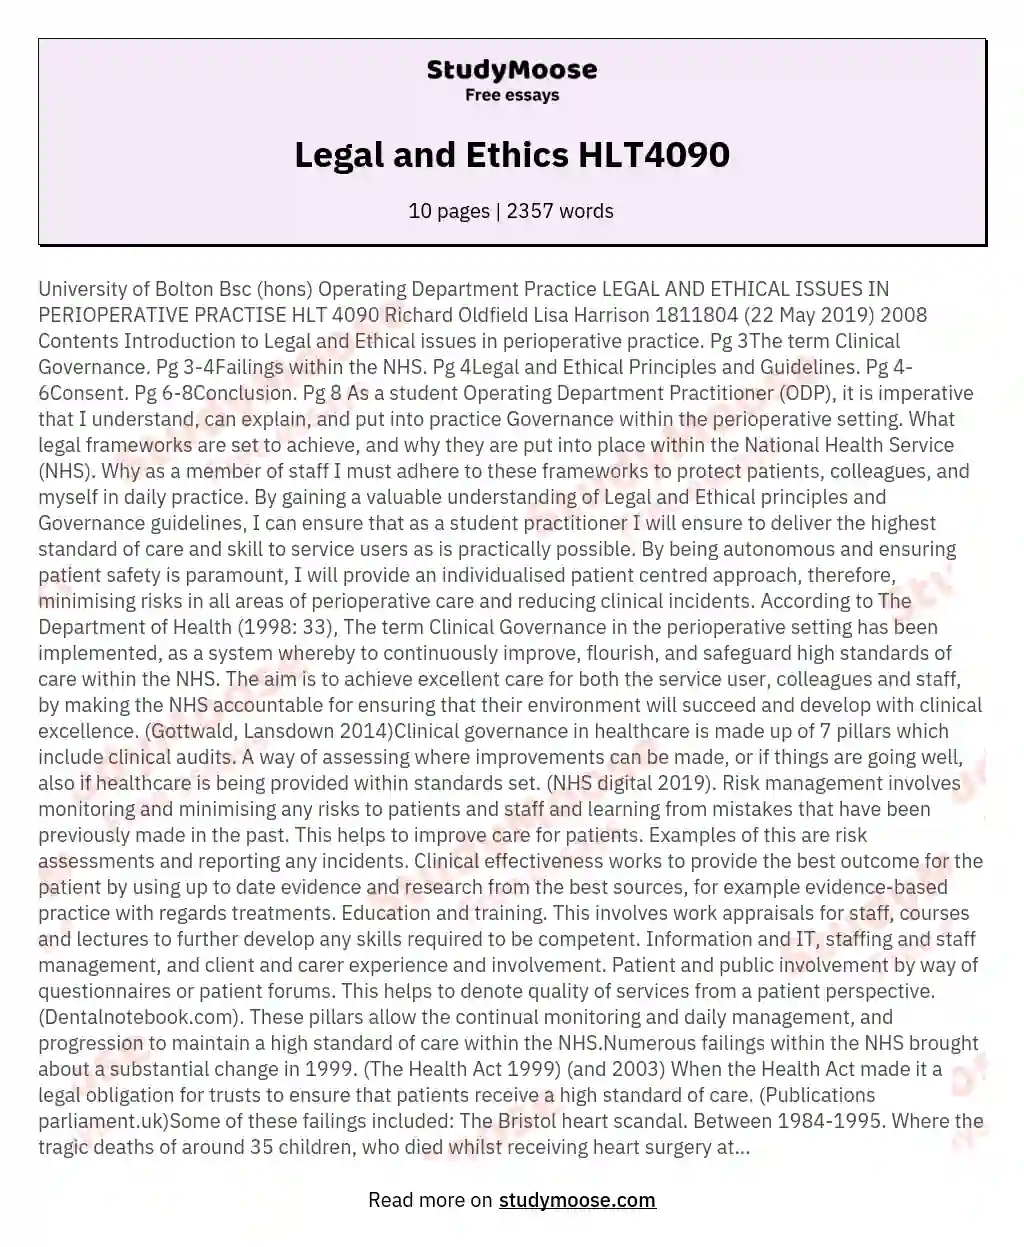 Legal and Ethics HLT4090 essay